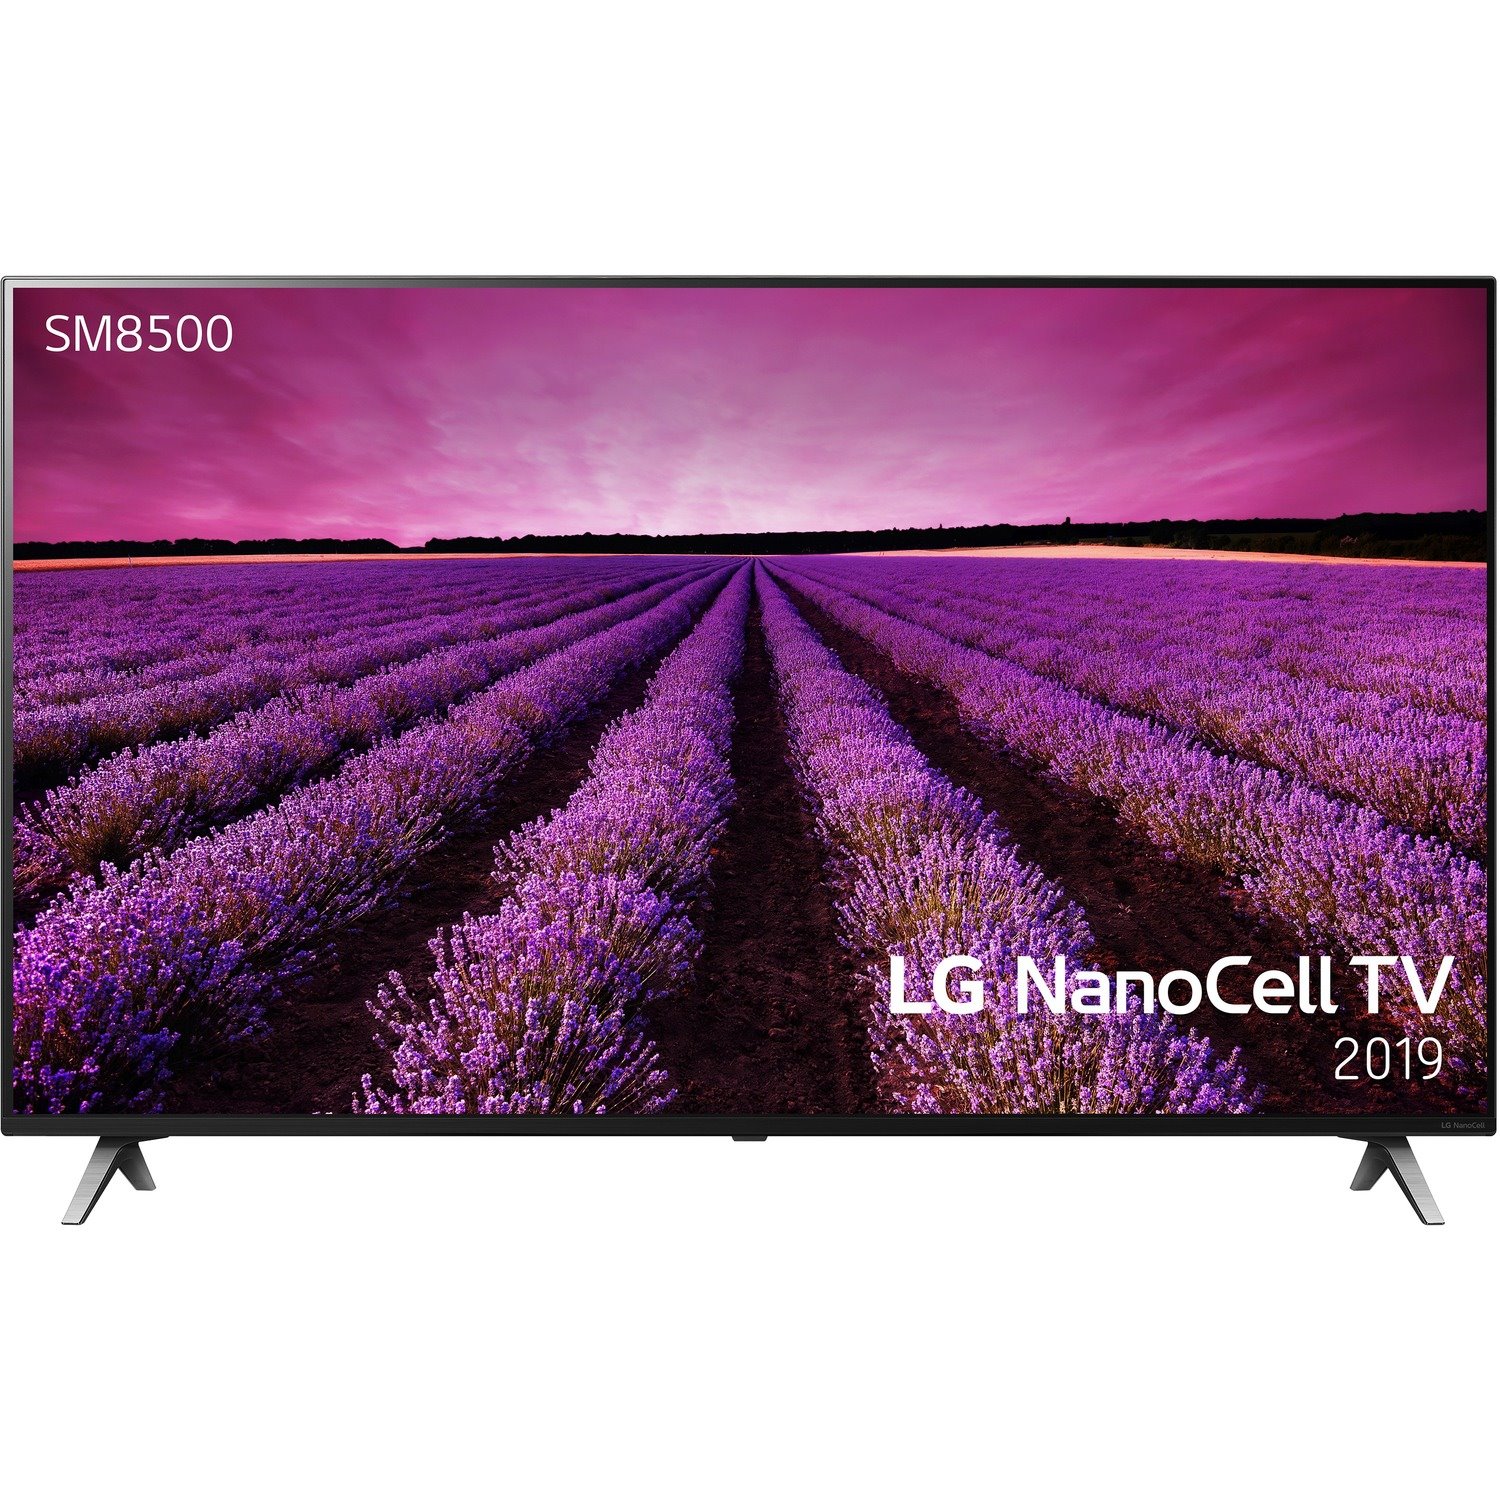 LG 49SM8500PLA 123 cm Smart LED-LCD TV - 4K UHDTV - Black, Dark Silver